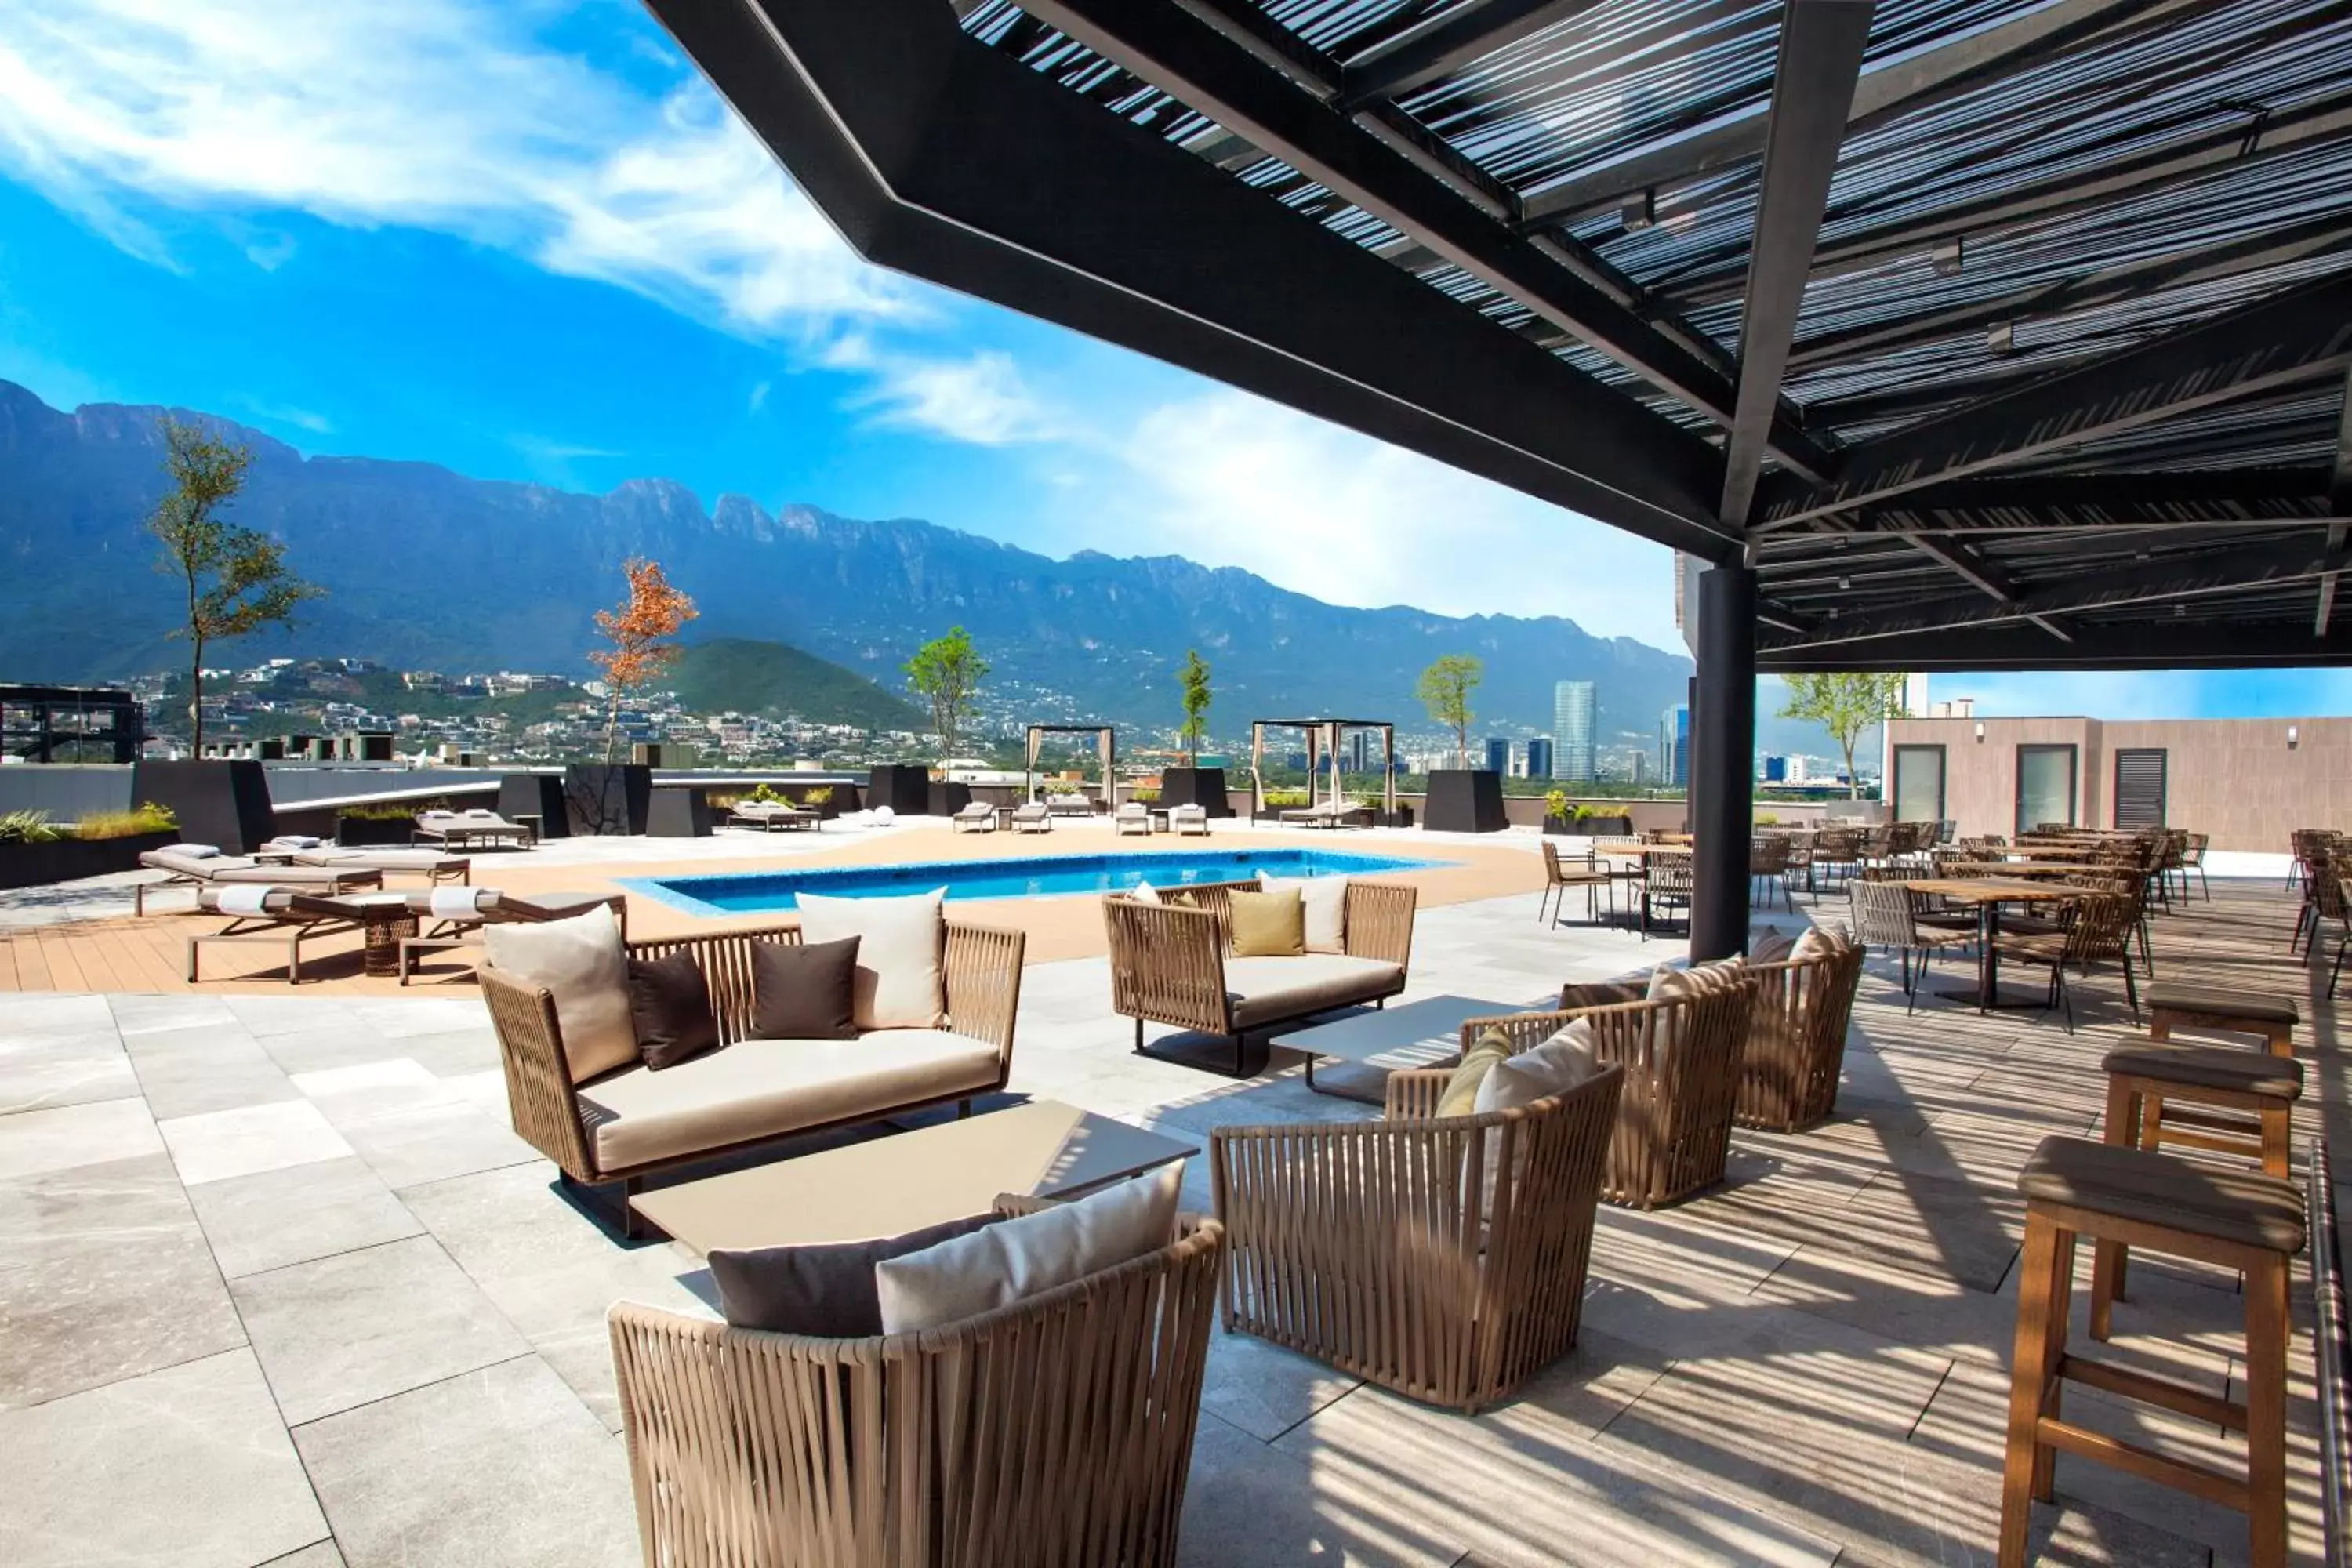 Balcony/Terrace, Swimming Pool in Camino Real Fashion Drive Monterrey